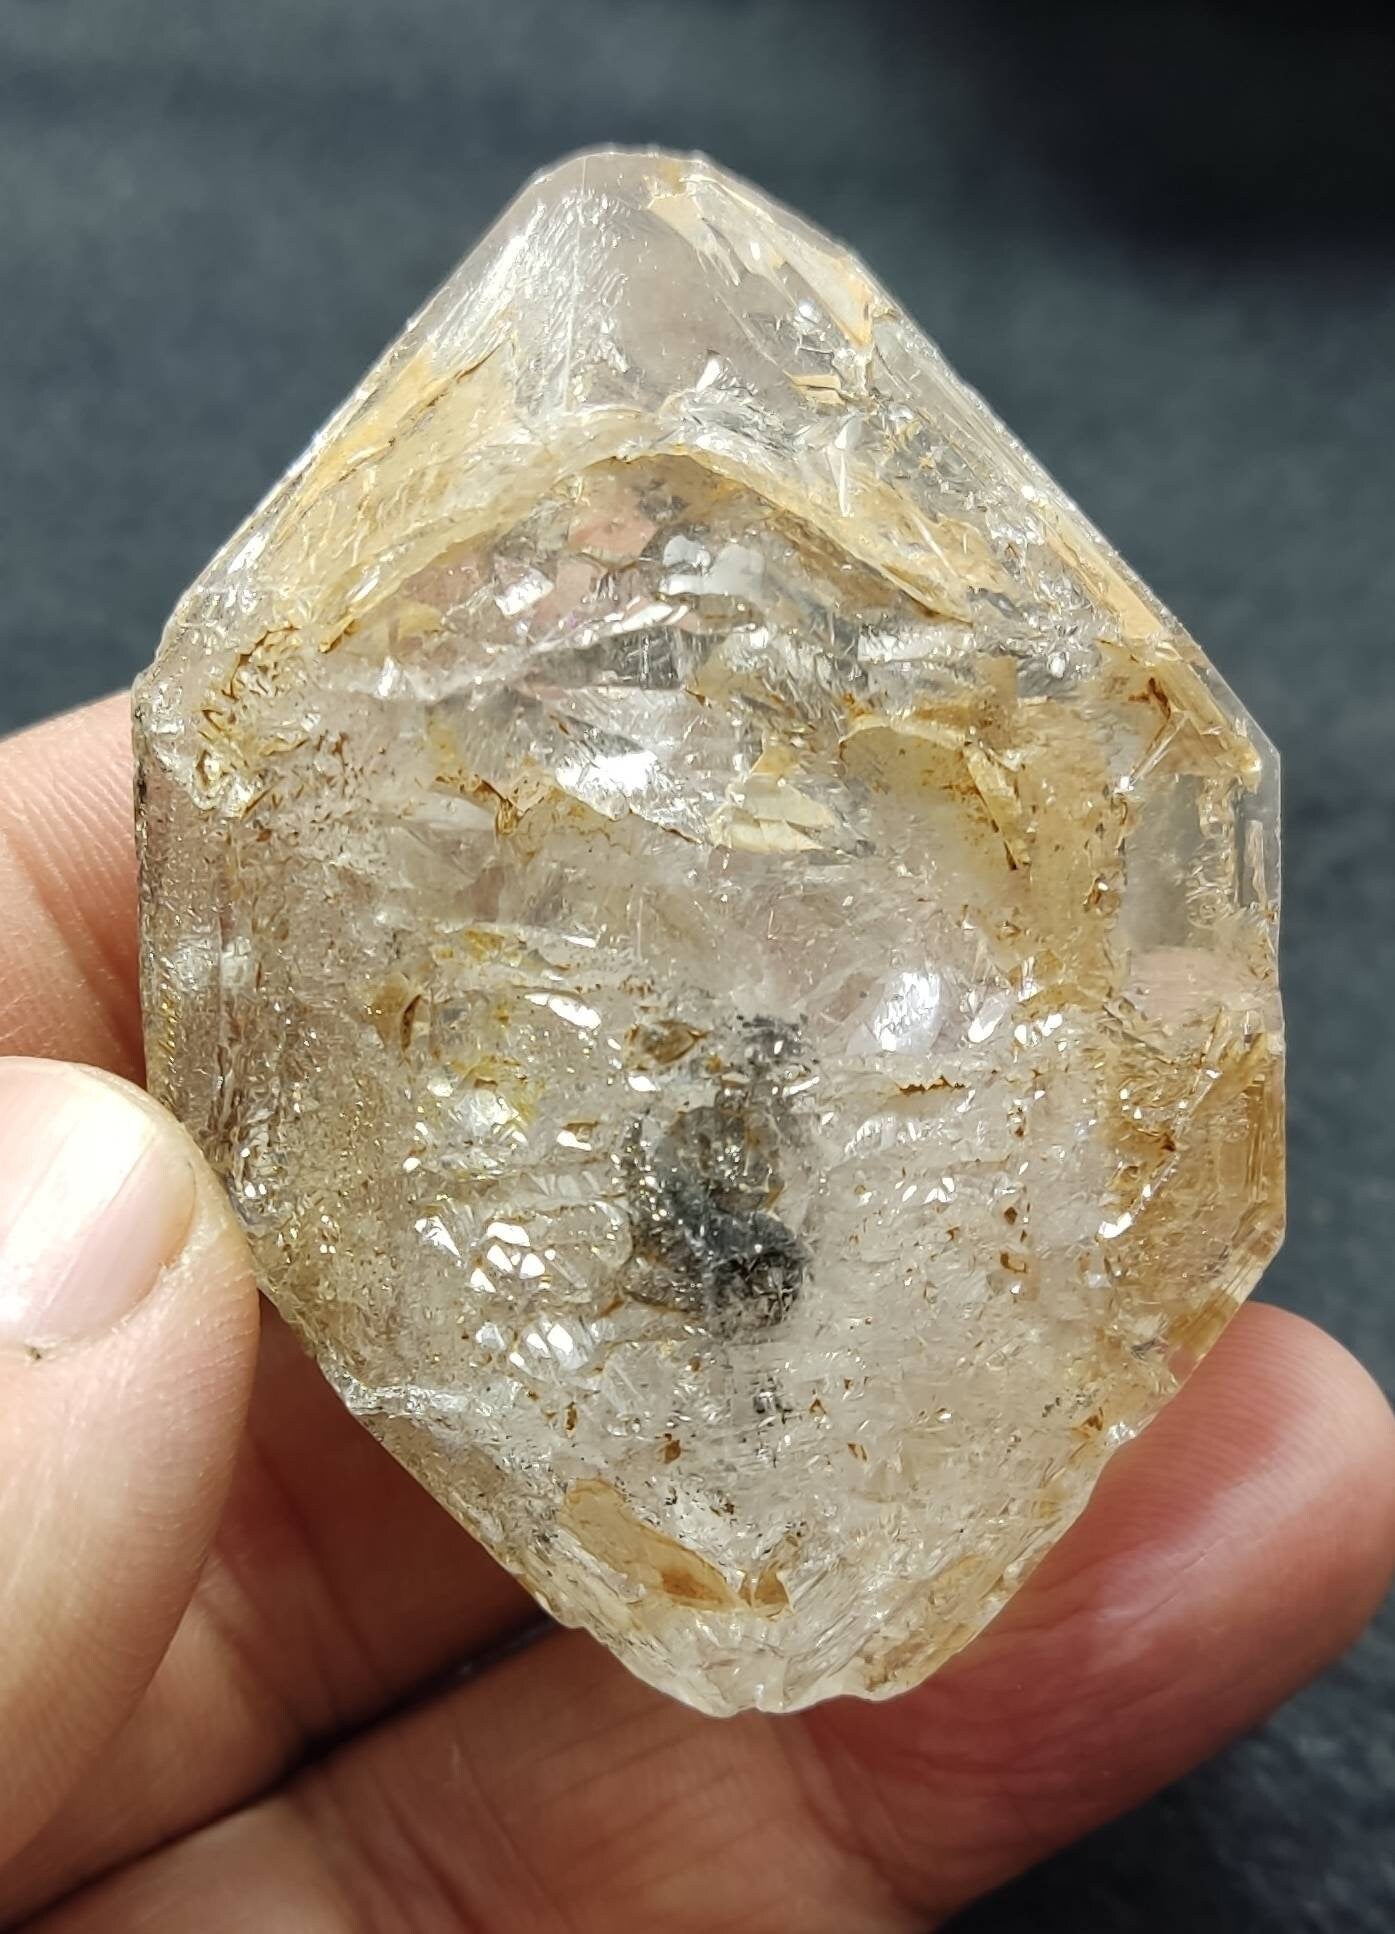 Fenster Skeletal window Quartz Crystal with clay inclusions 73 grams